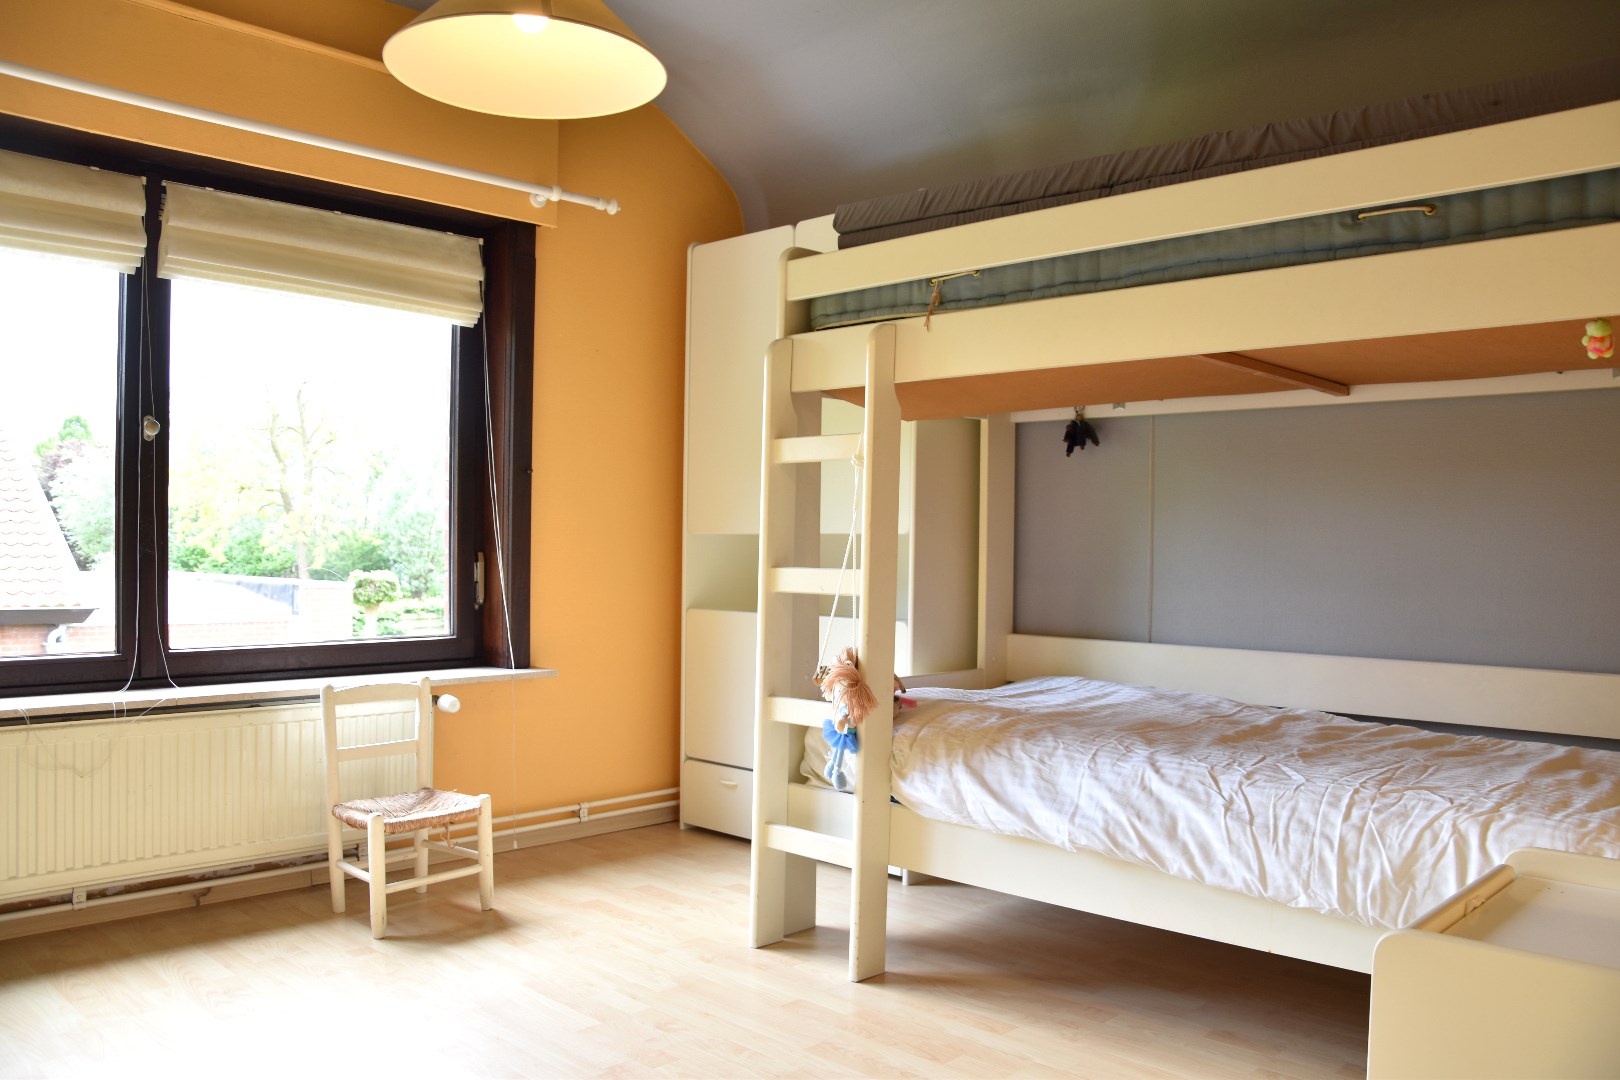 Goed onderhouden woning met 3 slaapkamers, garage en zonnige tuin te koop in Wevelgem foto 9